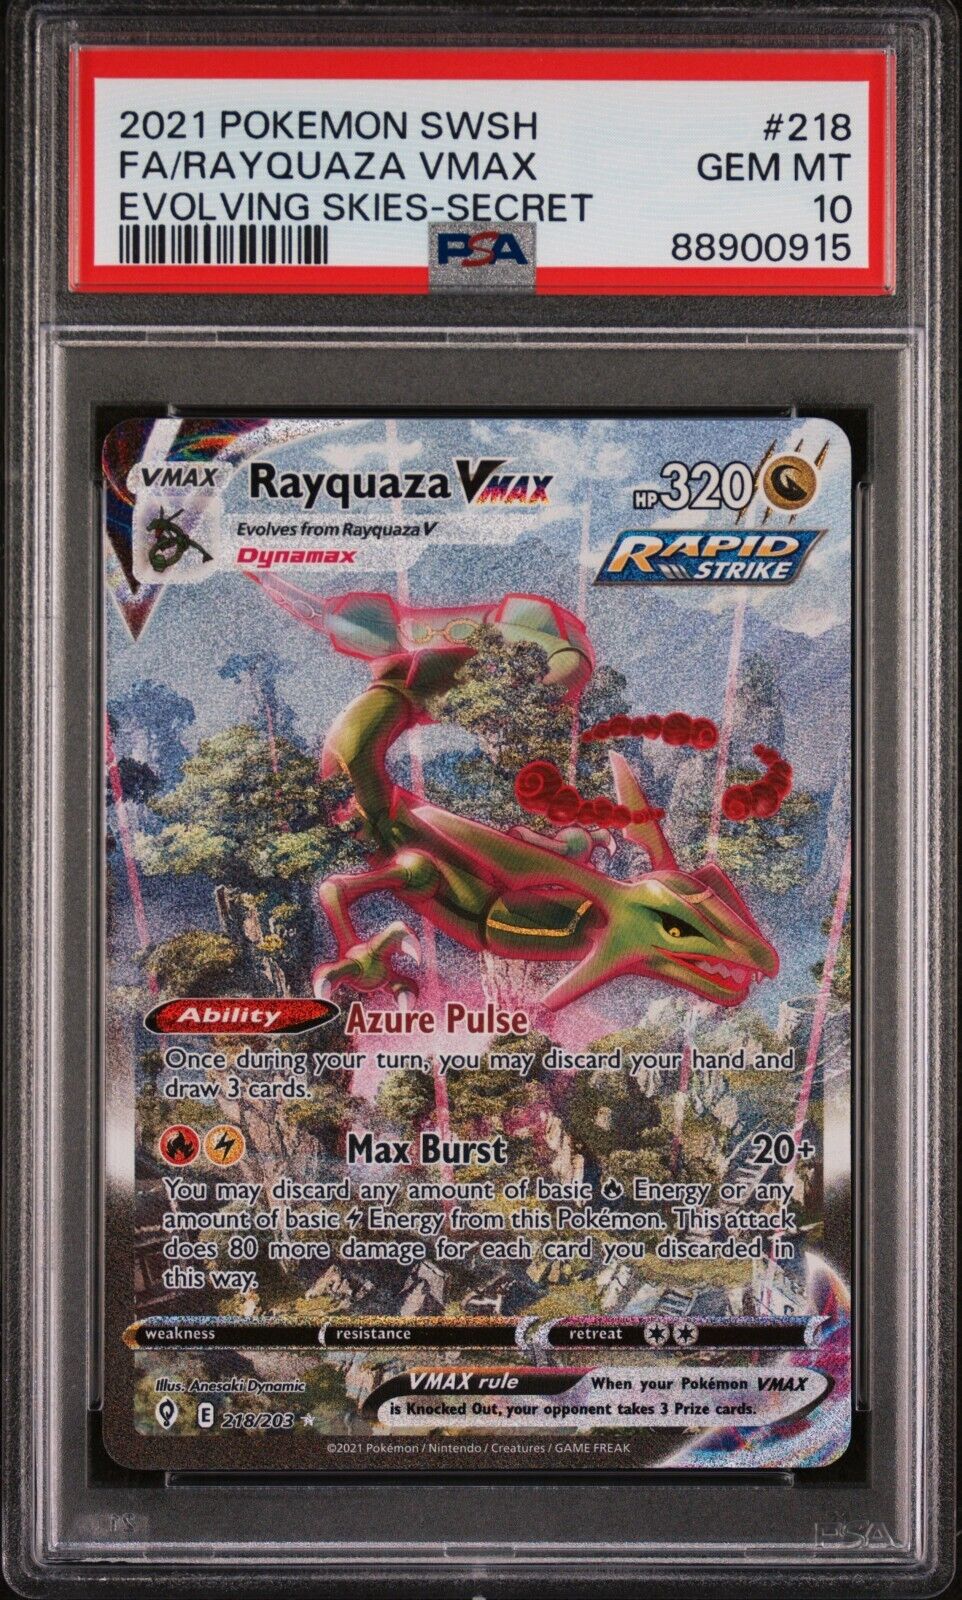 PSA 10 Rayquaza VMAX Full Art 2021 Pokemon Card 218/203 Evolving Skies